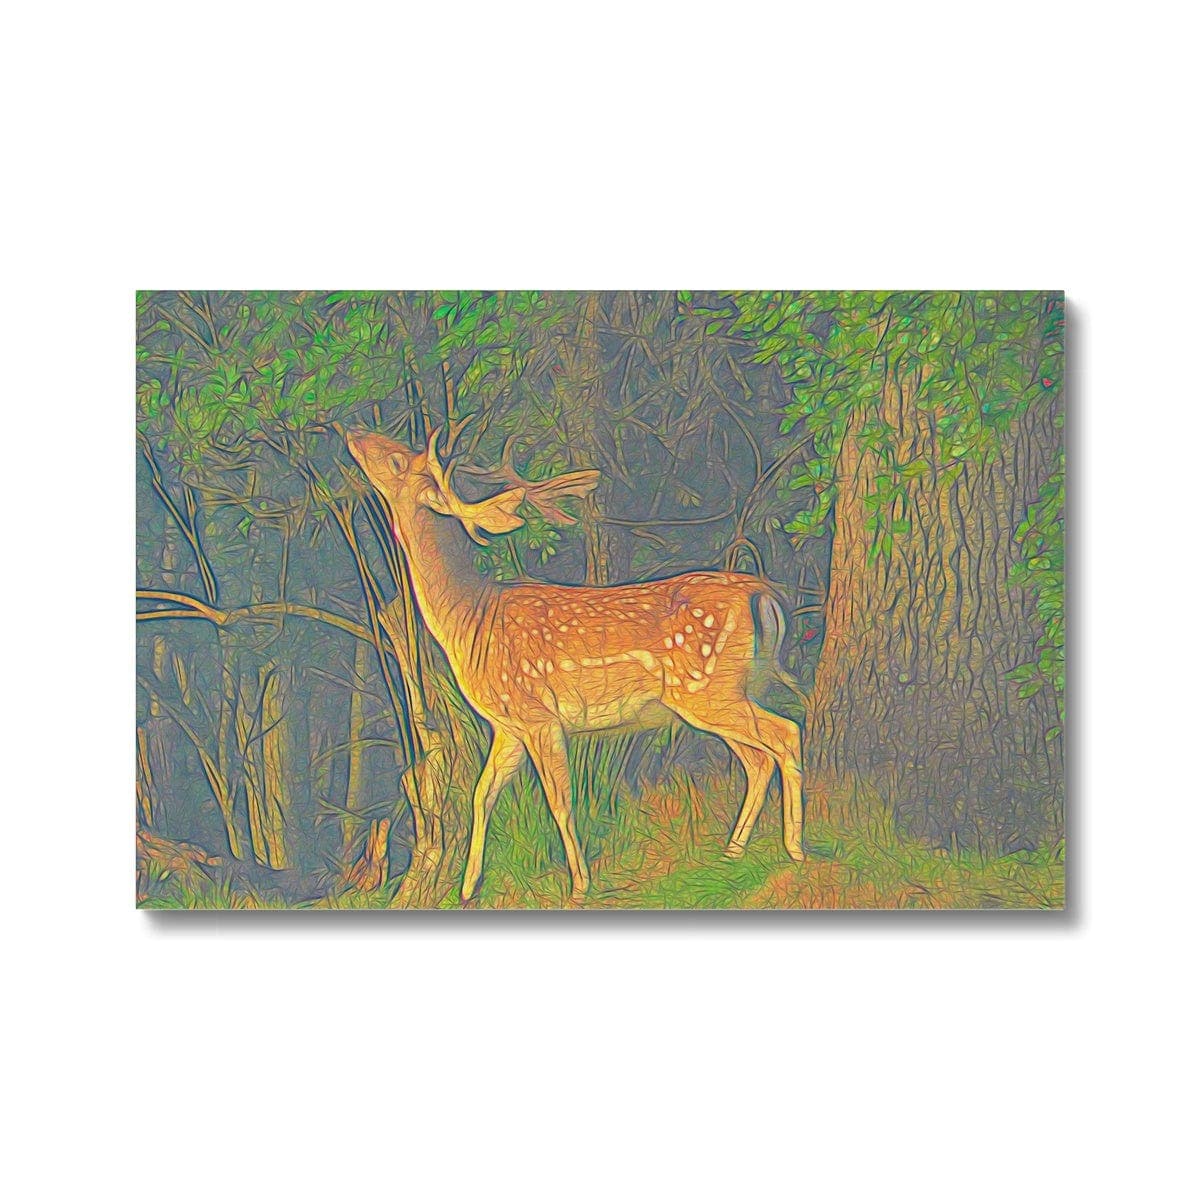 Young deer, Canvas, by Ingrid Hütten